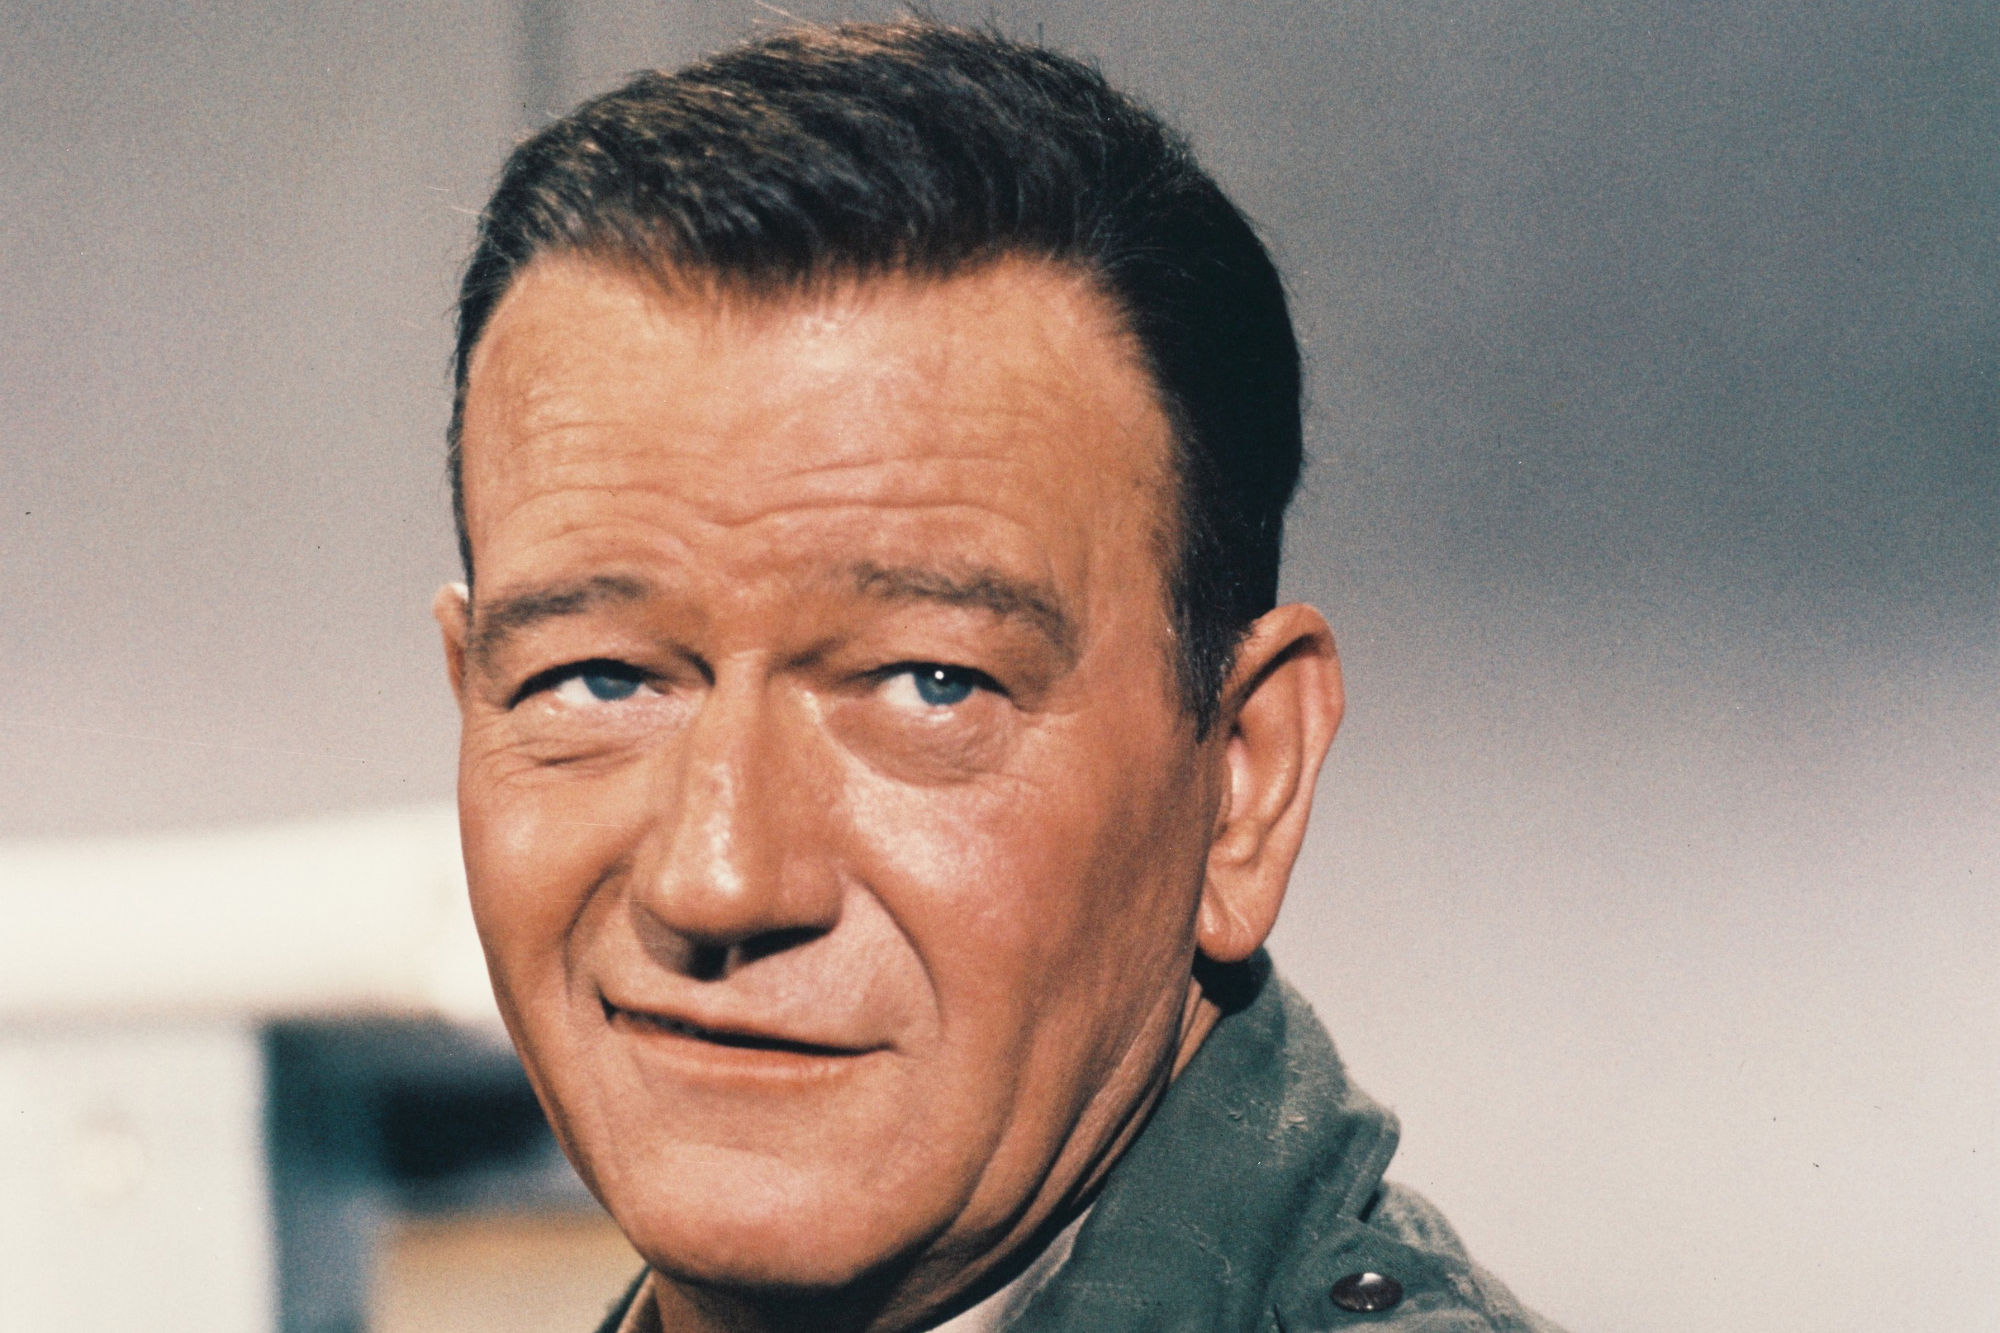 'The Longest Day' John Wayne as American Lt. Col. Benjamin Vandervoort giving a slight smile wearing his military uniform